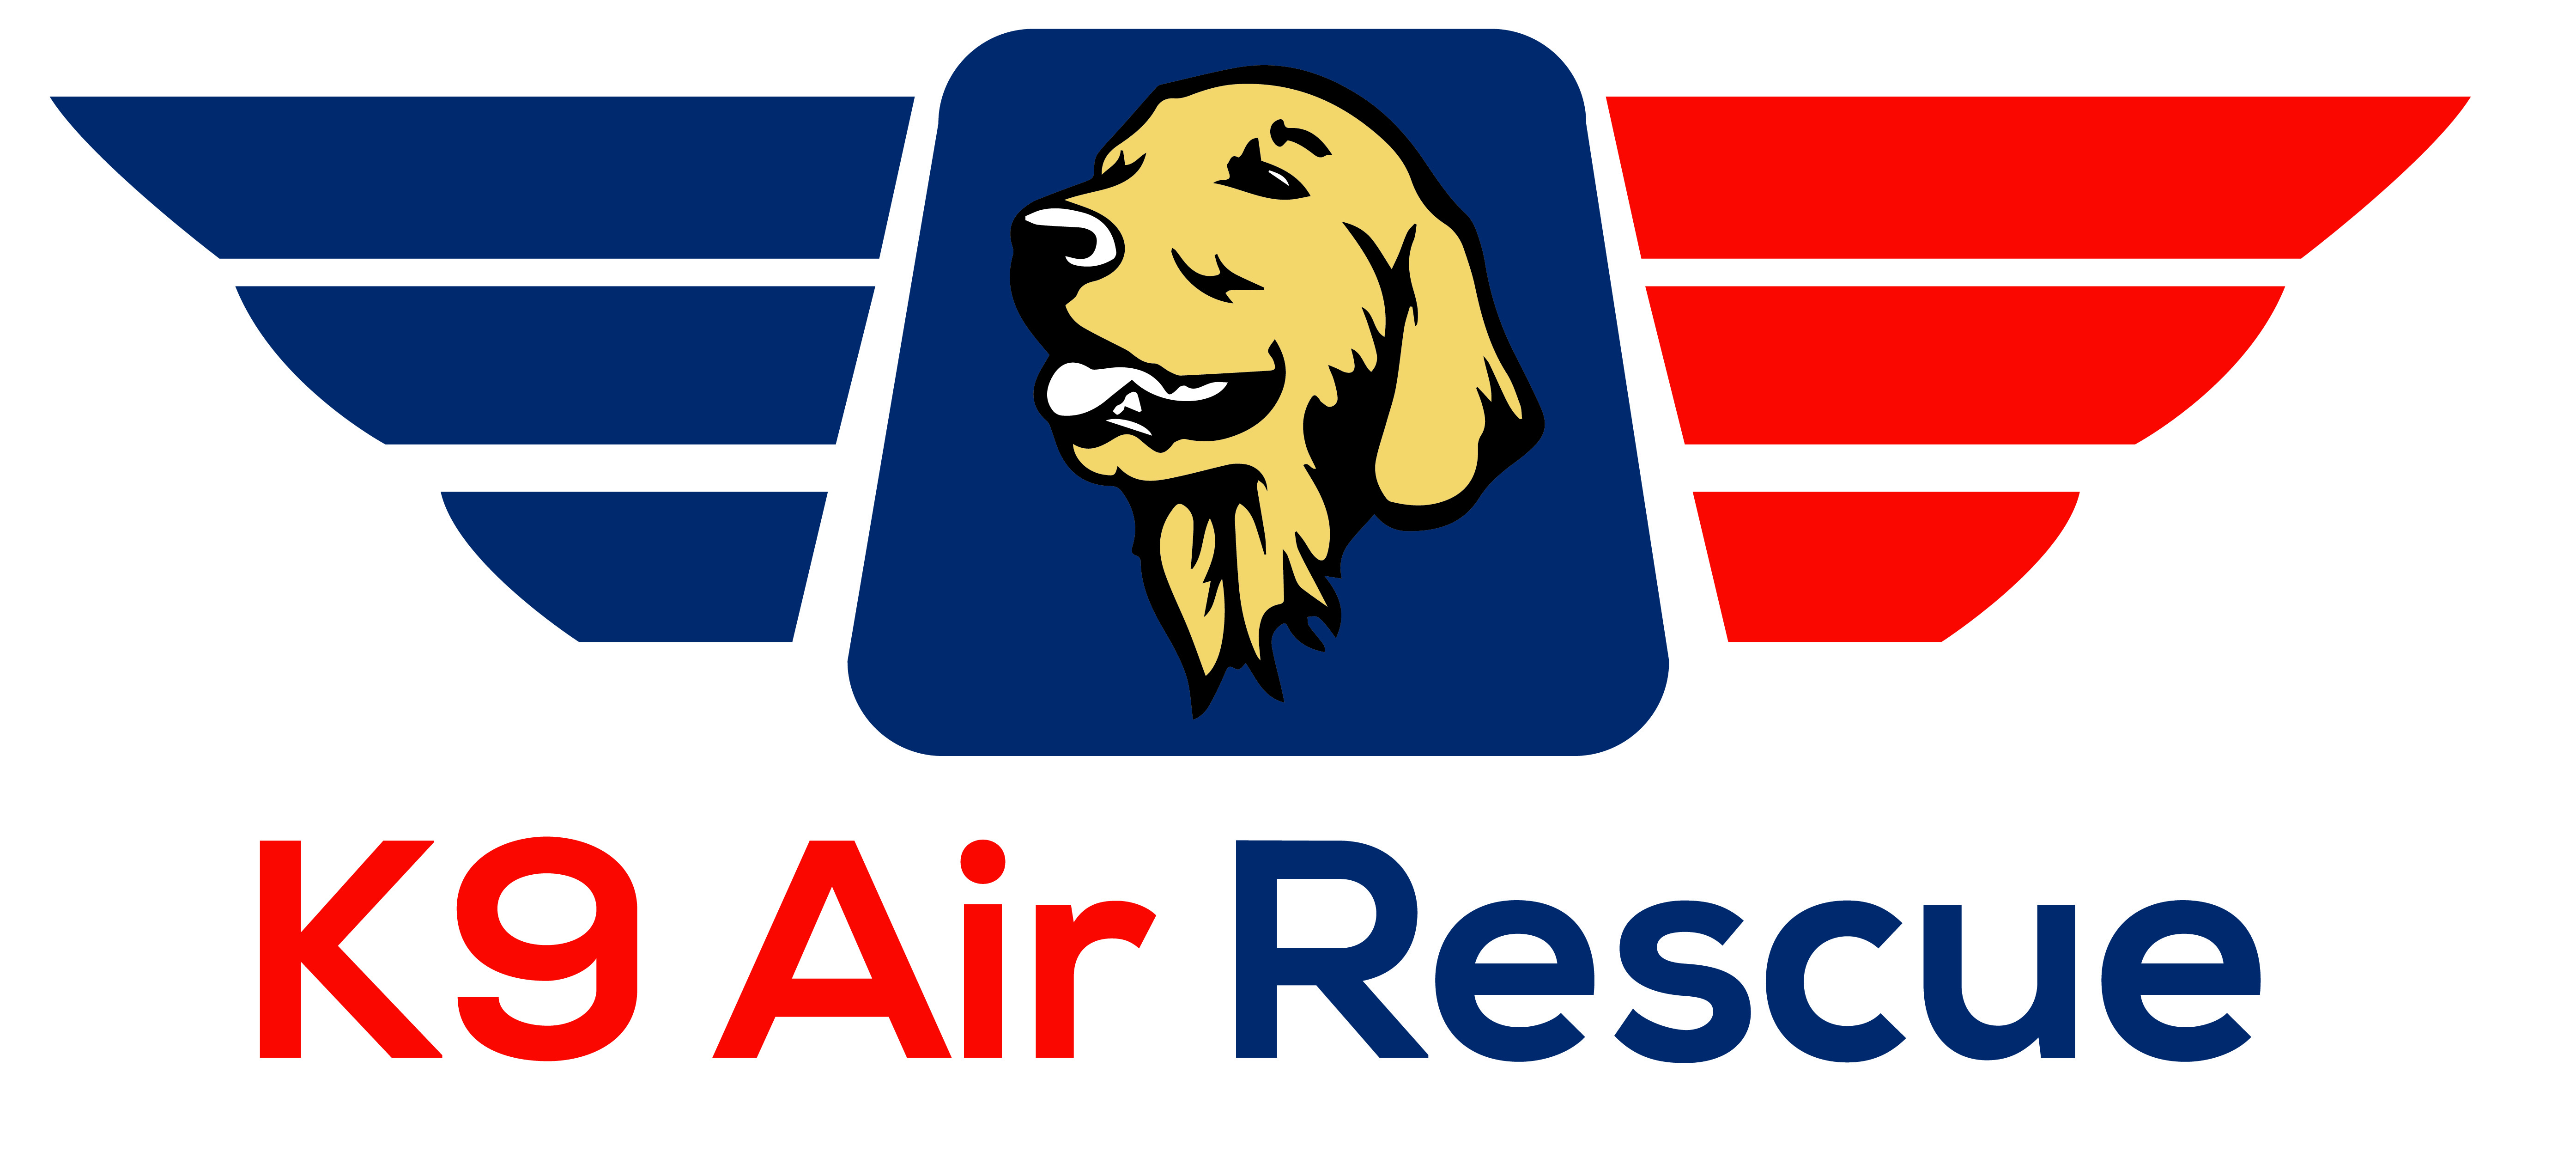 Basic RGB – K9 Air Rescue